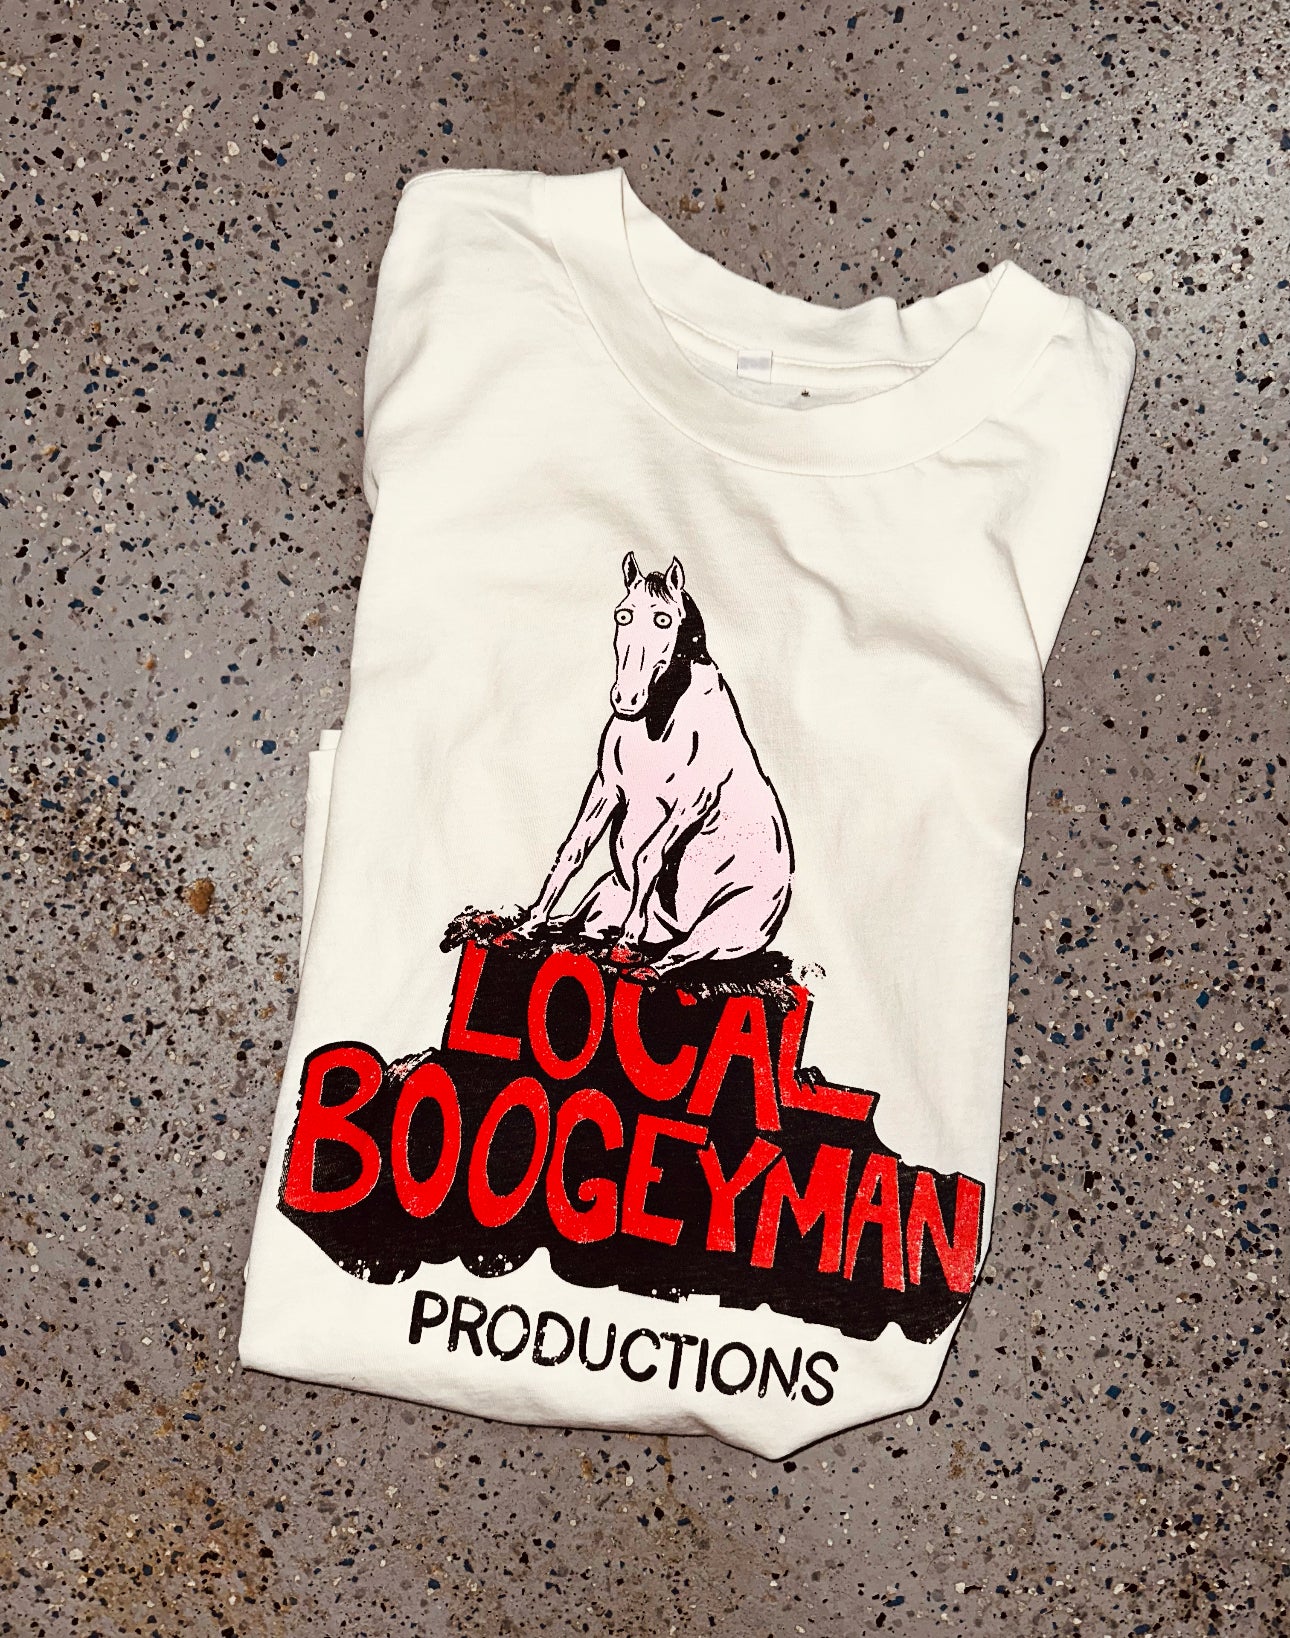 LOCAL BOOGEYMAN PRODUCTIONS